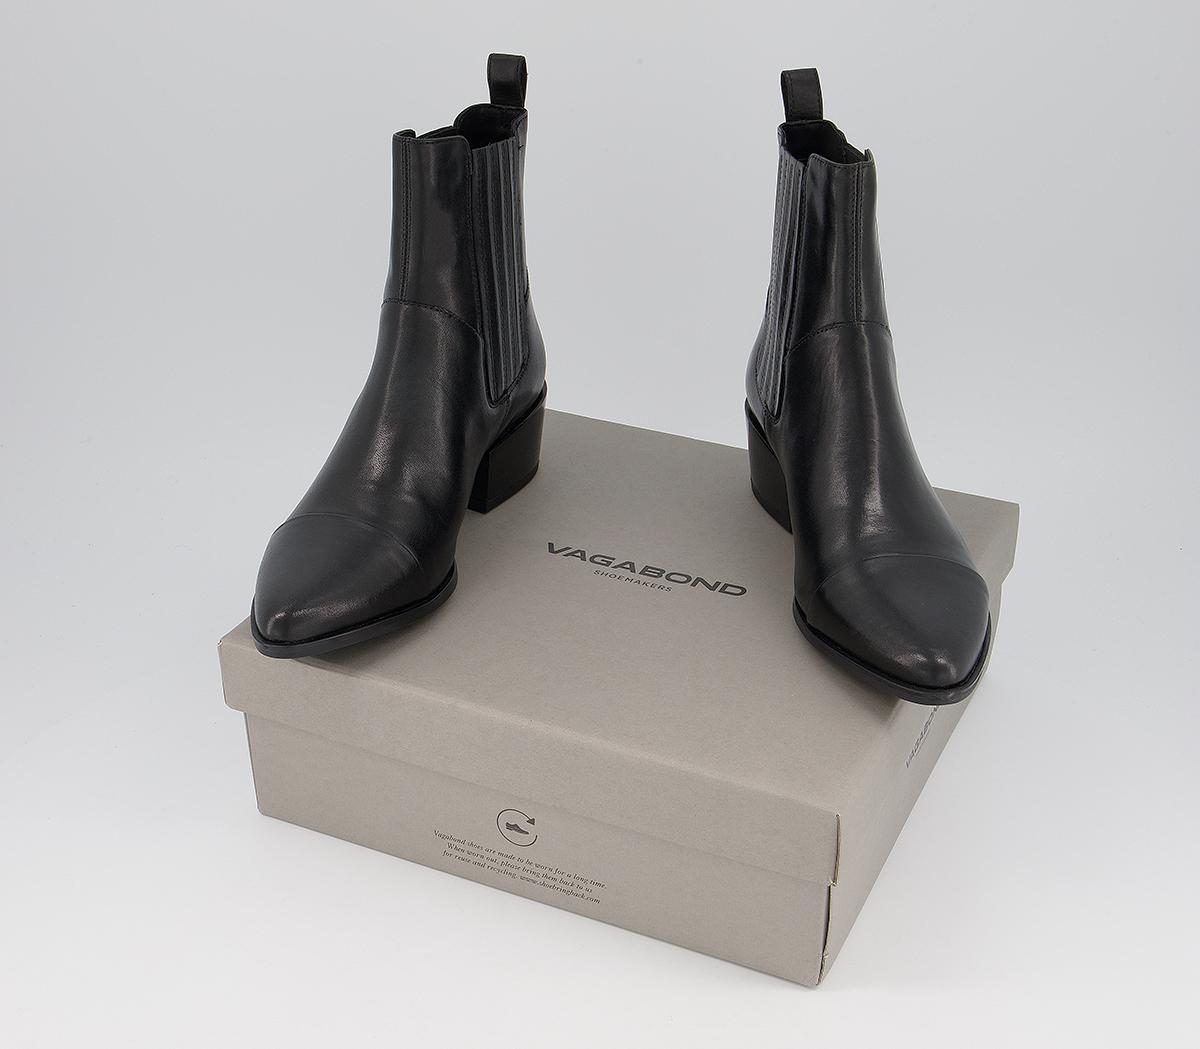 Vagabond Shoemakers Marja Chelsea Boots Black Leather - Women's Ankle Boots